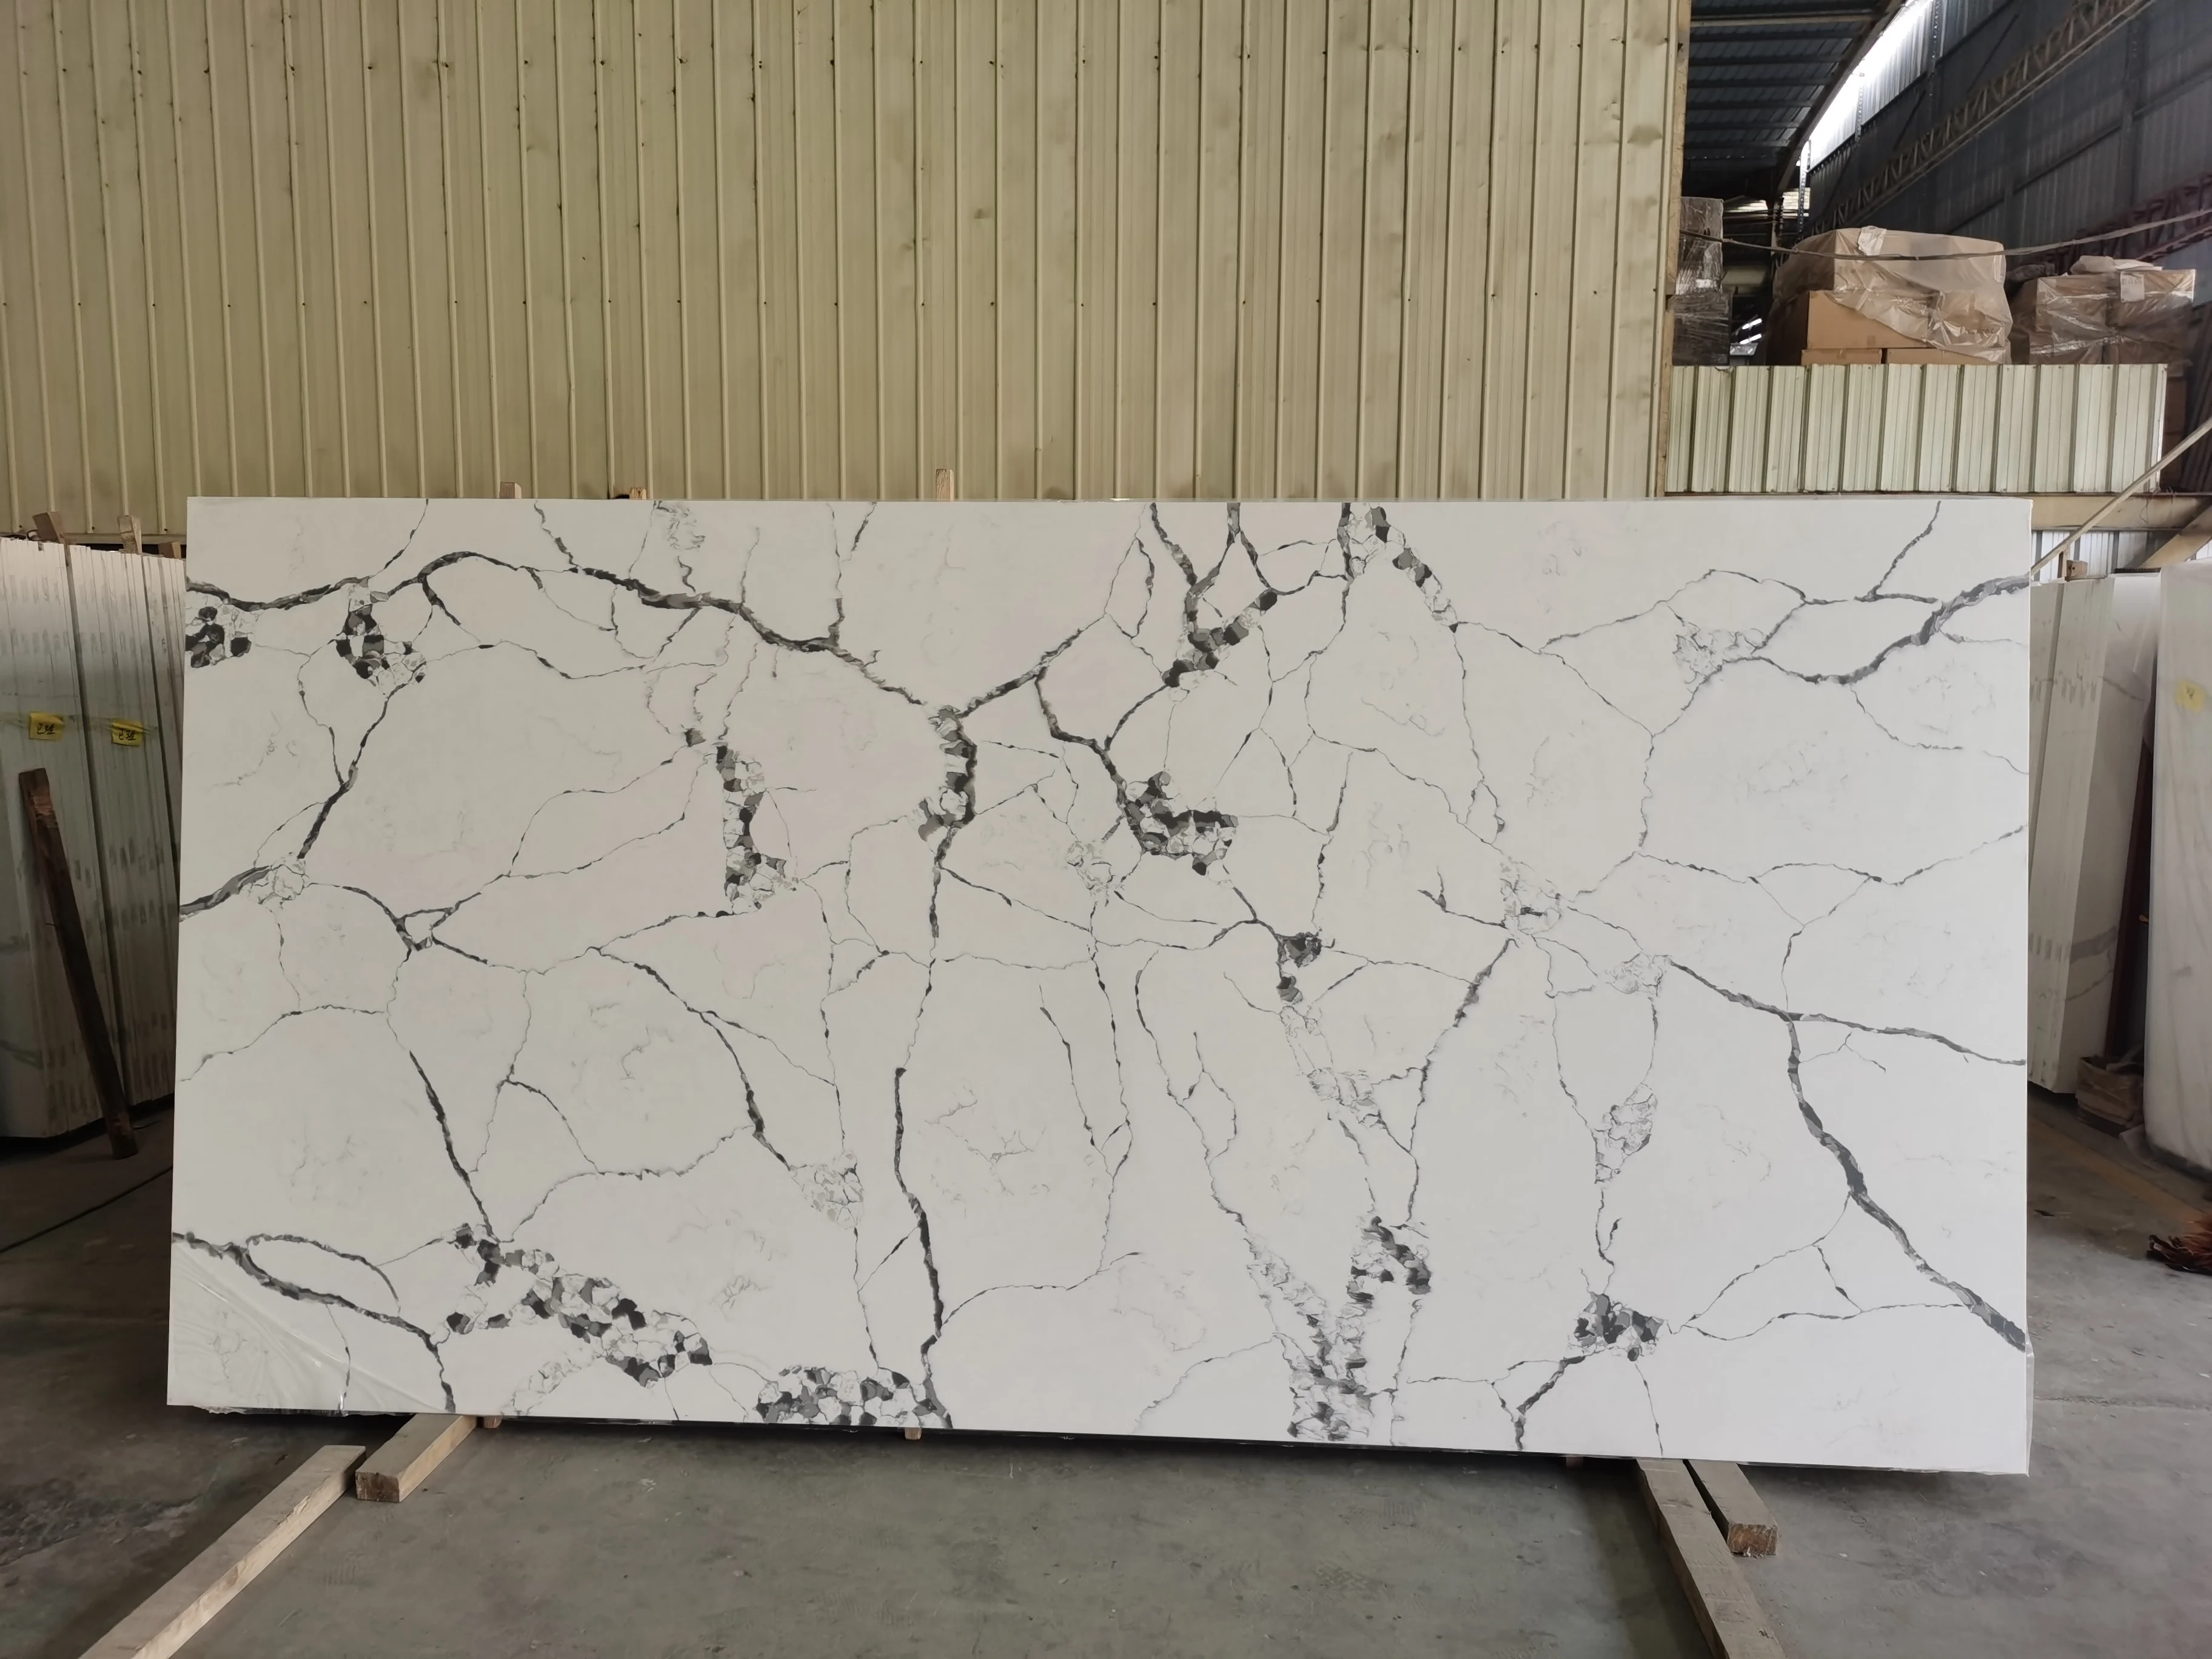 Black Quartz Vanity Countertops Kitchen Stone Slab With white Veins Flat Edge Prefab Artificial Quartz Stone Countertop Island